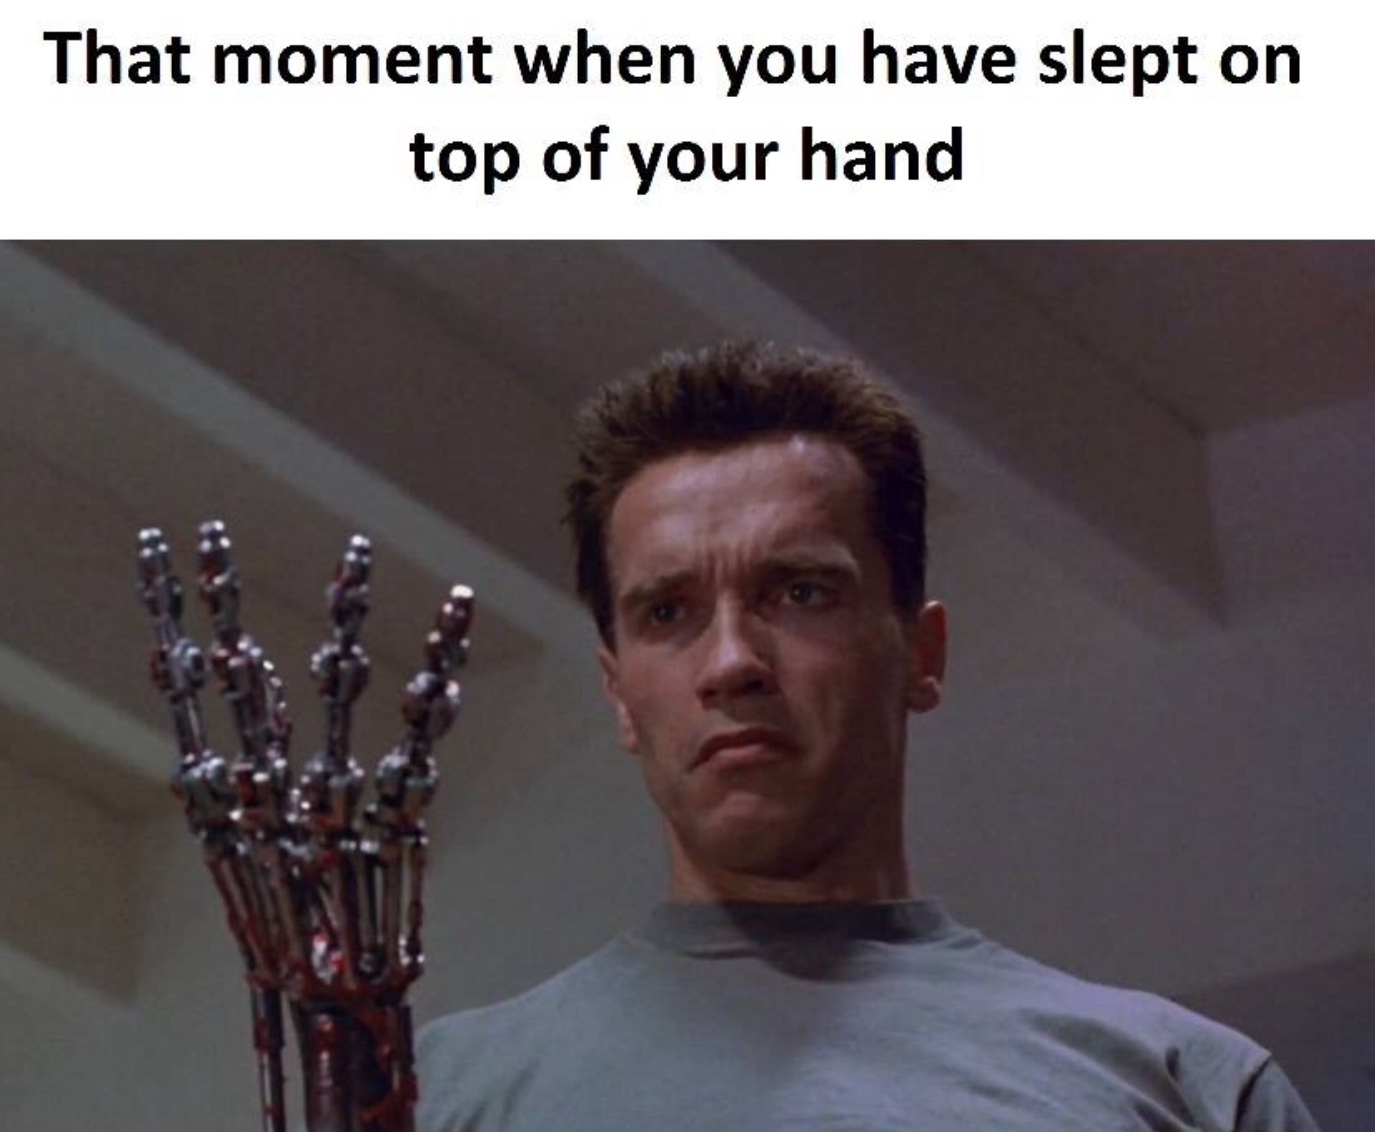 Terminator - meme